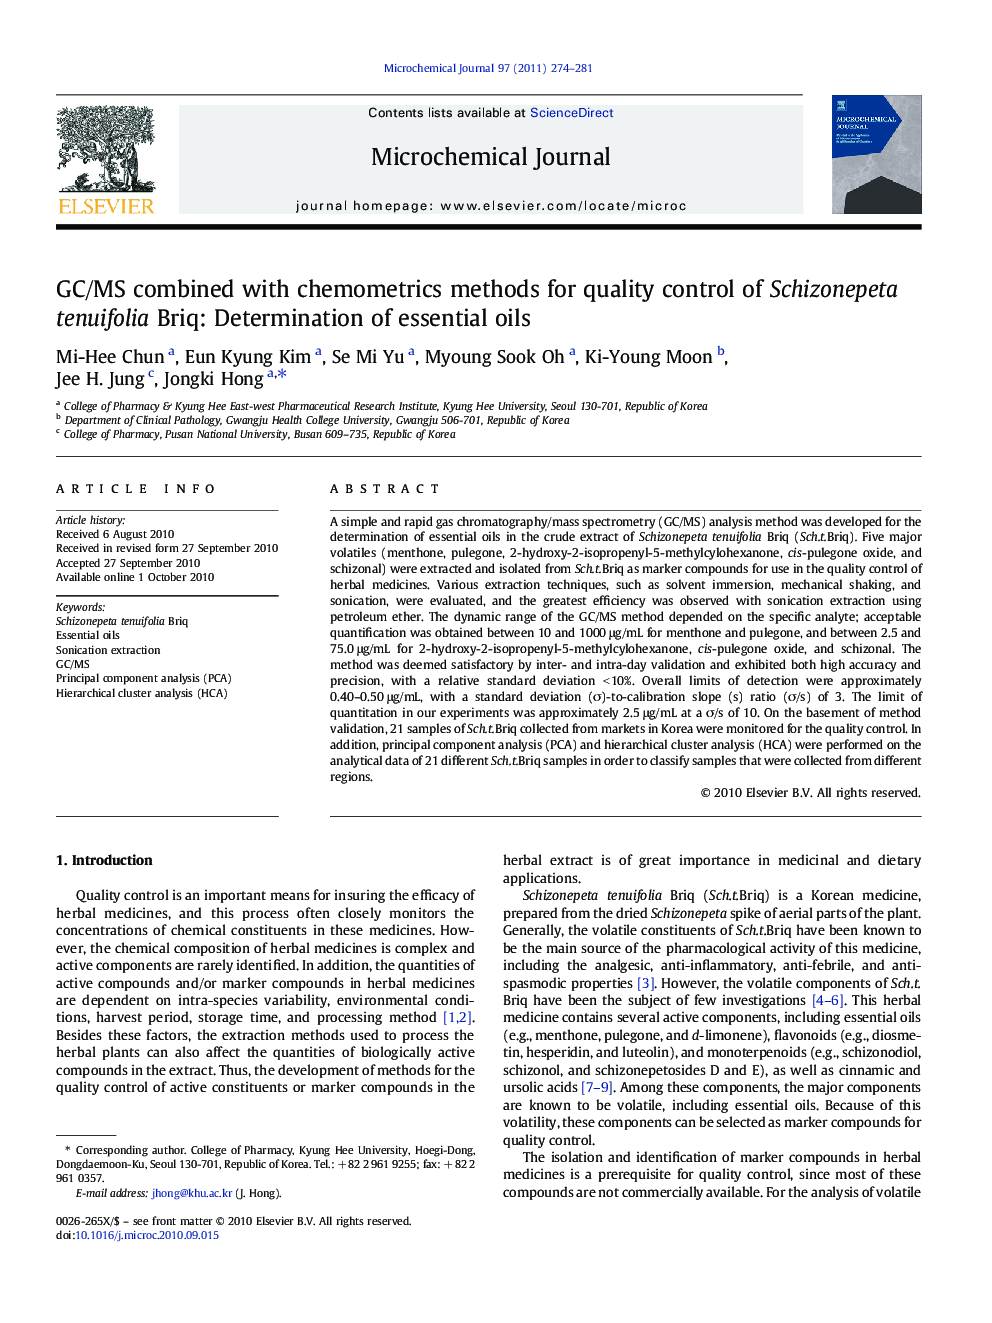 GC/MS combined with chemometrics methods for quality control of Schizonepeta tenuifolia Briq: Determination of essential oils